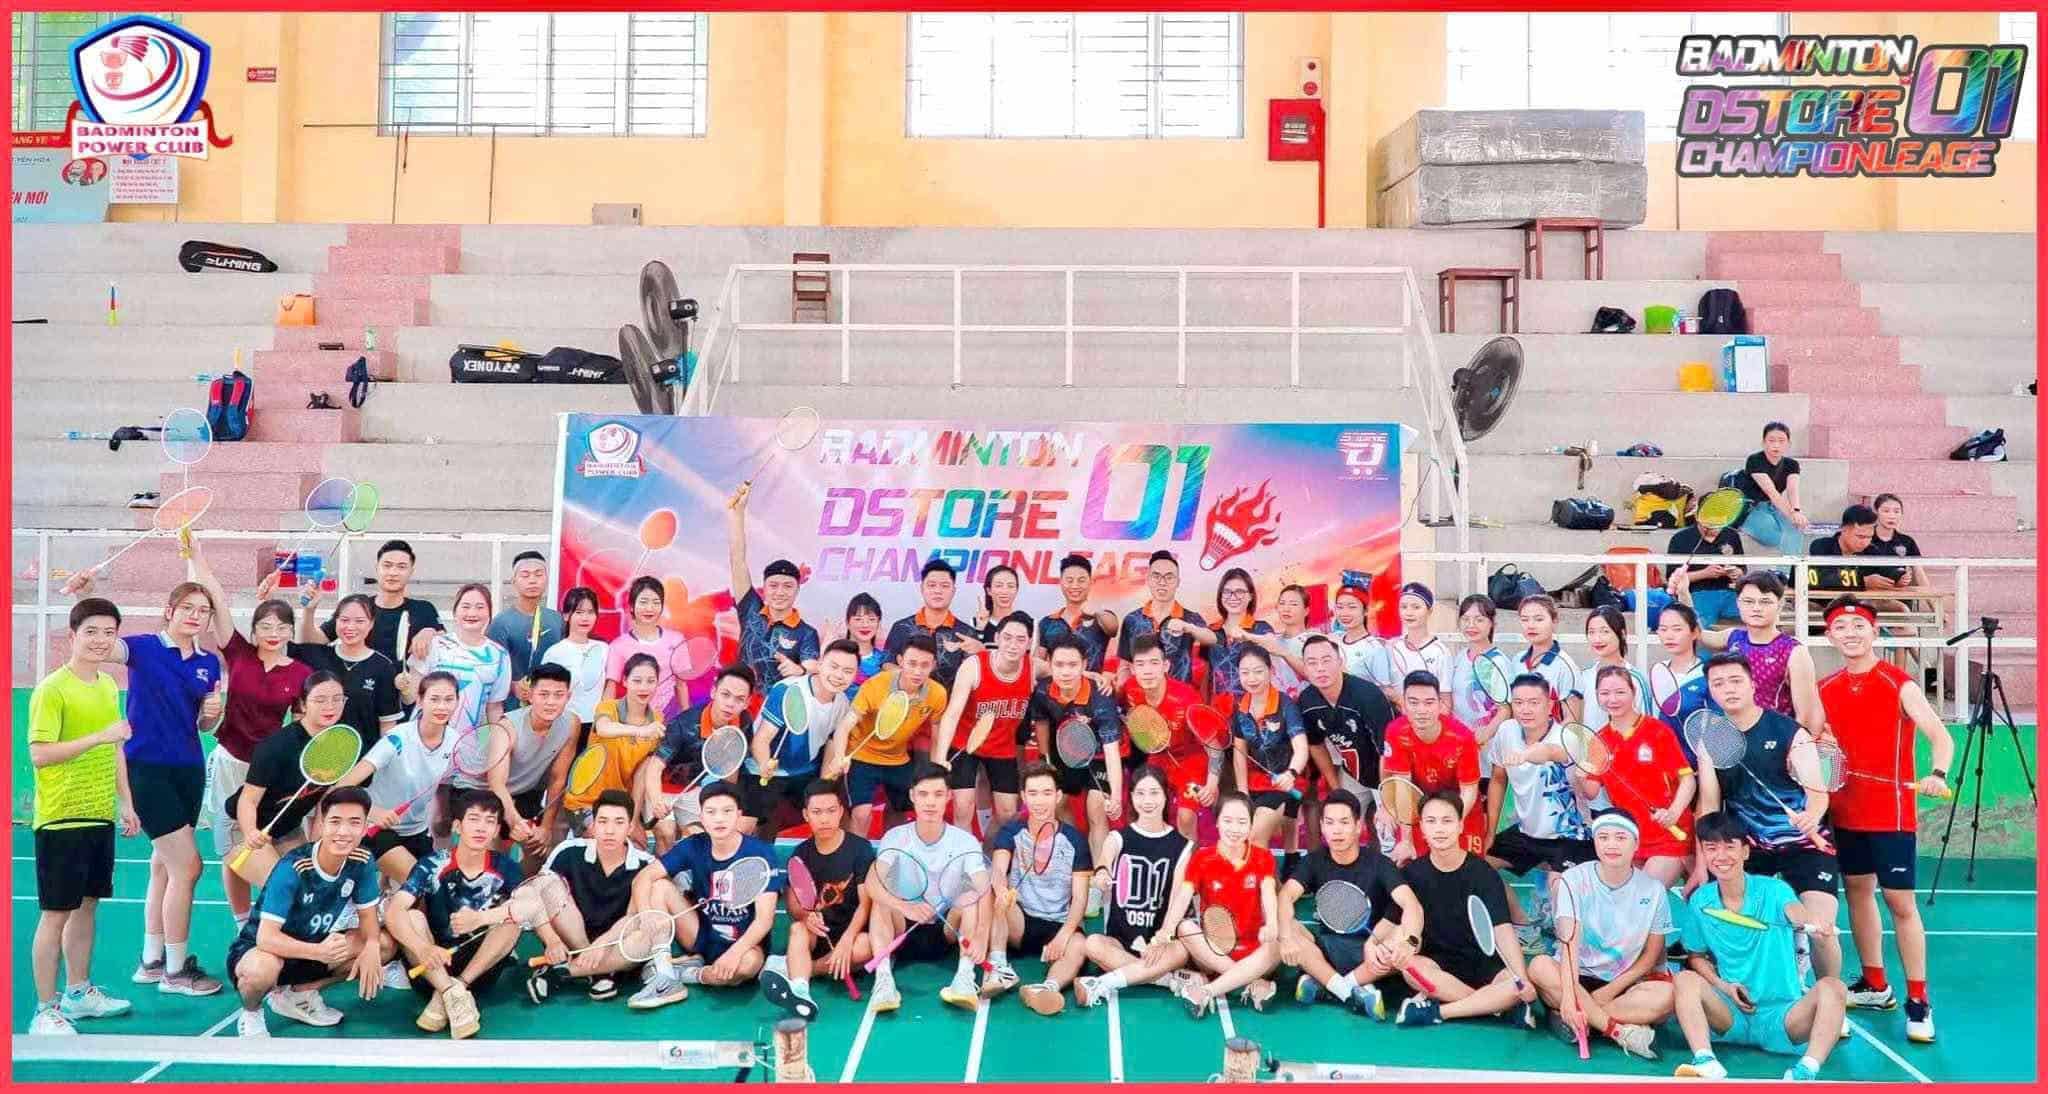 BADMINTON CHAMPIONLEAGE - Power Club Dstore Hà Nội